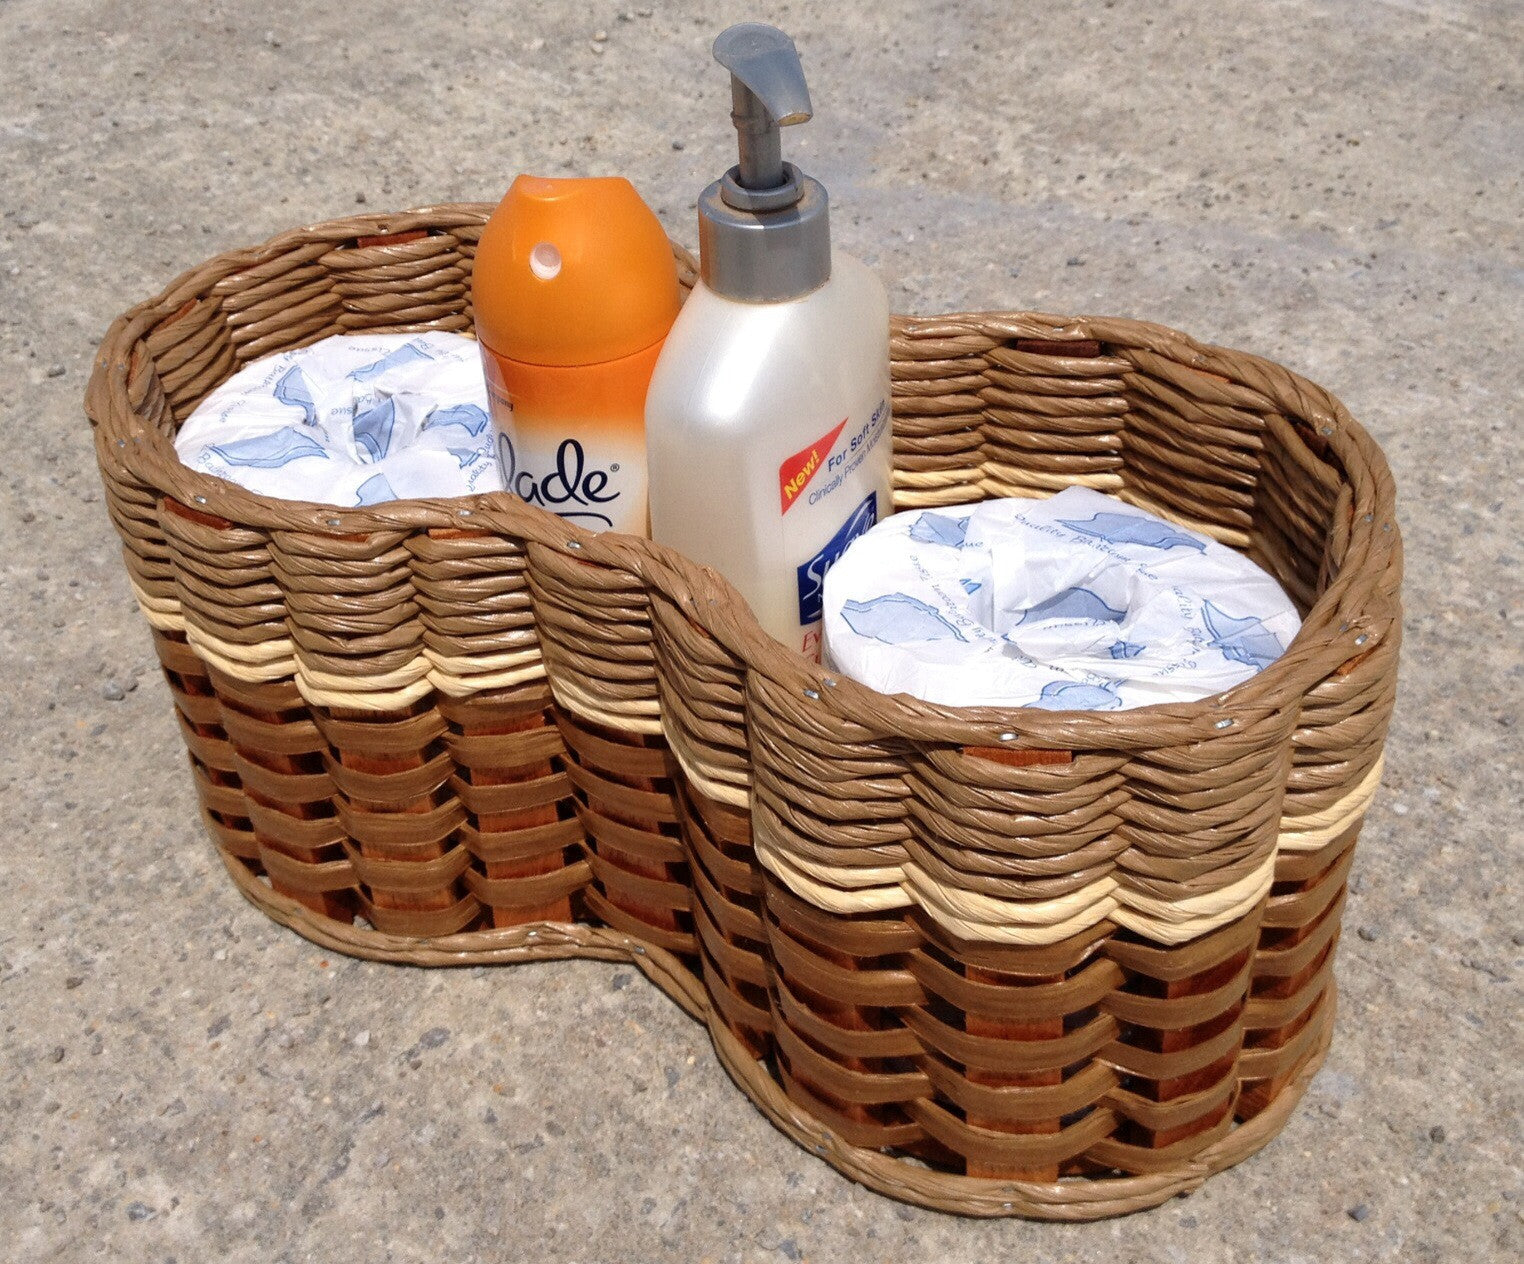 Toilet paper/air-freshener basket